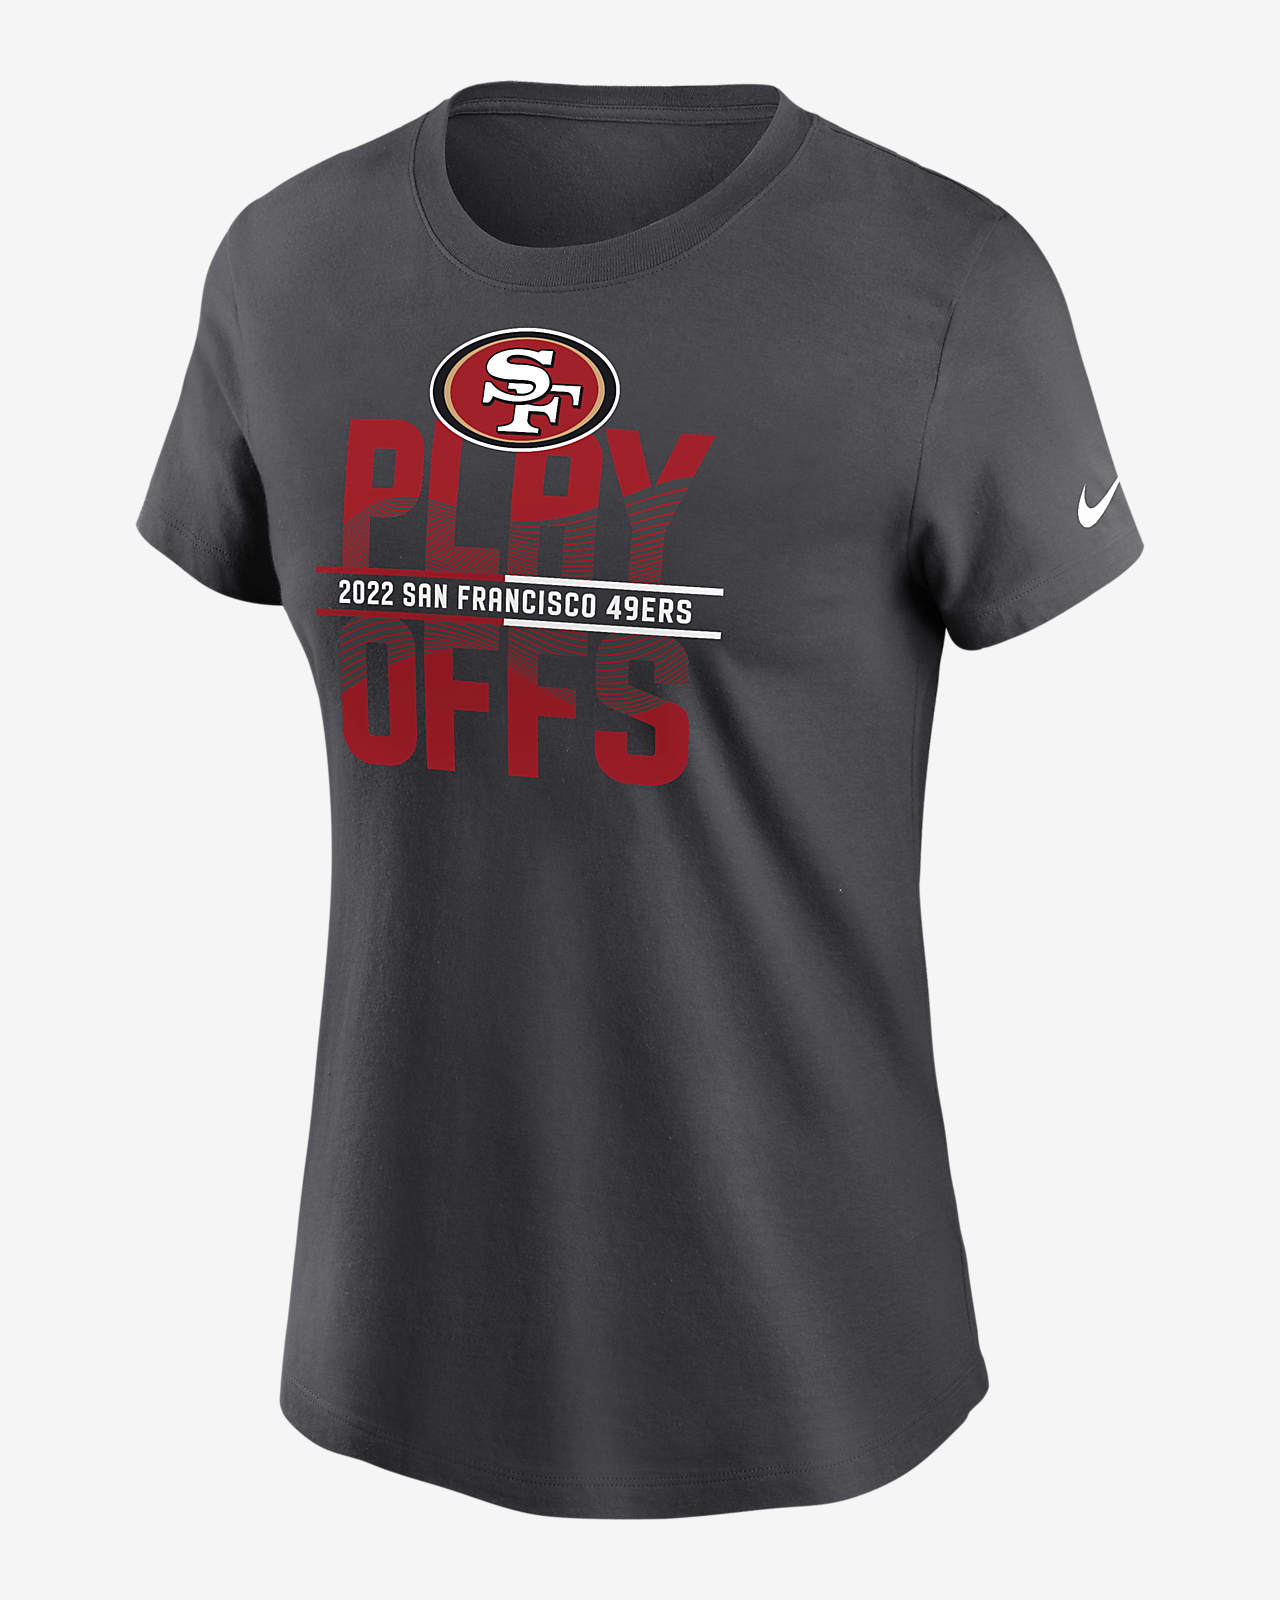 Nike 2022 NFL Playoffs Iconic (NFL San Francisco 49ers) Women's T-Shirt.